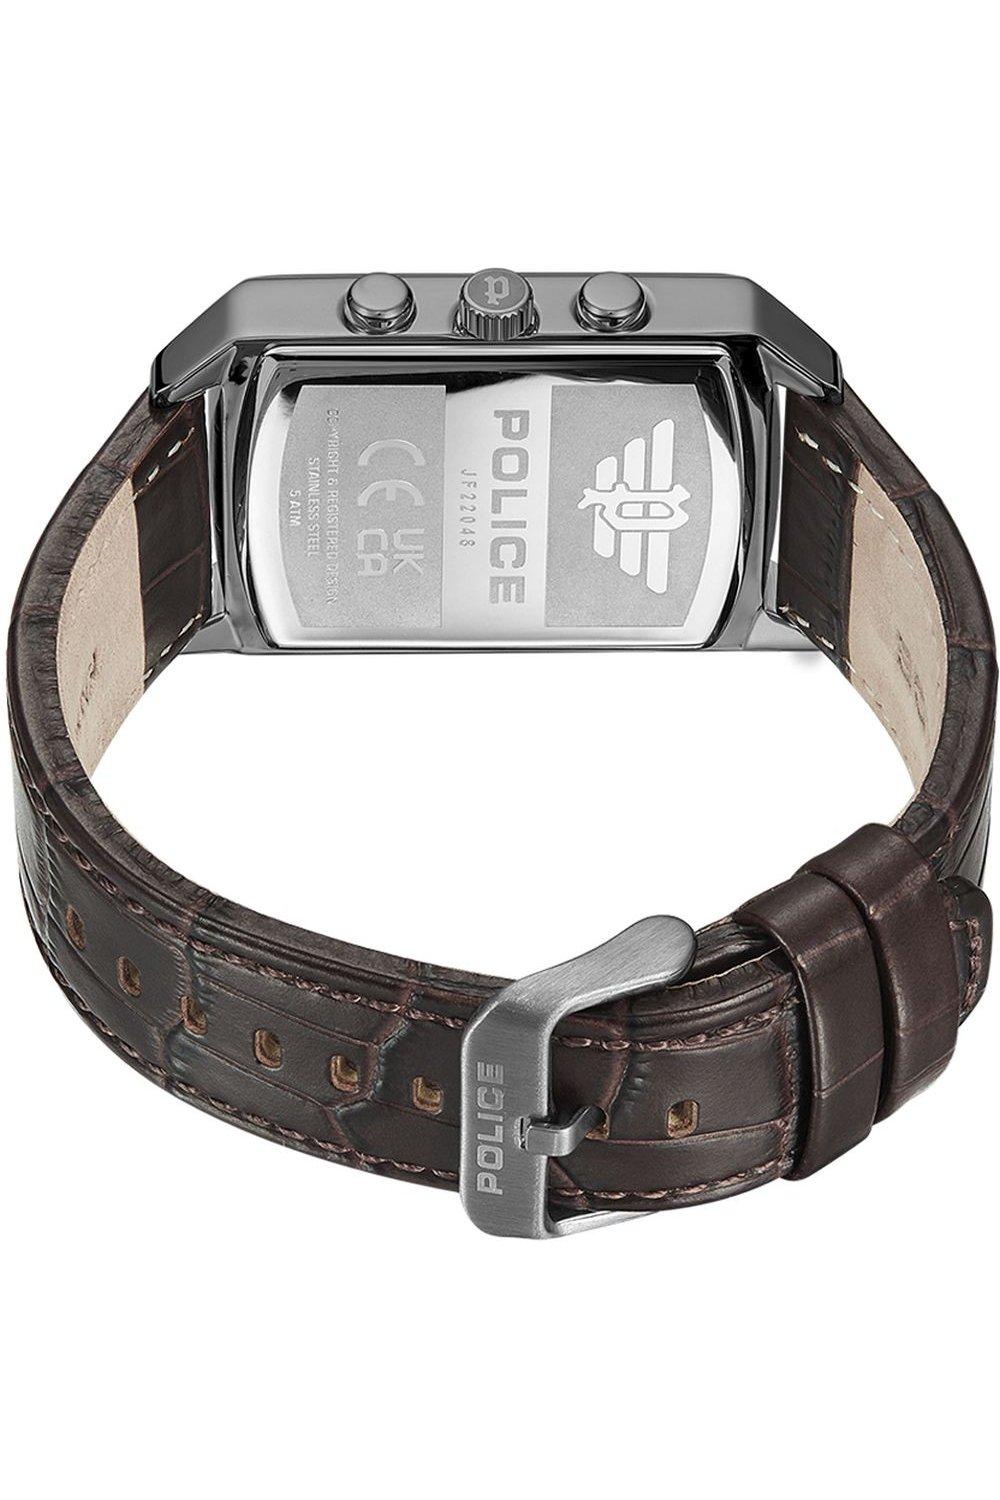 Watches | Saleve Stainless Steel - Police Analogue Fashion Pewjf2204802 Watch | Quartz